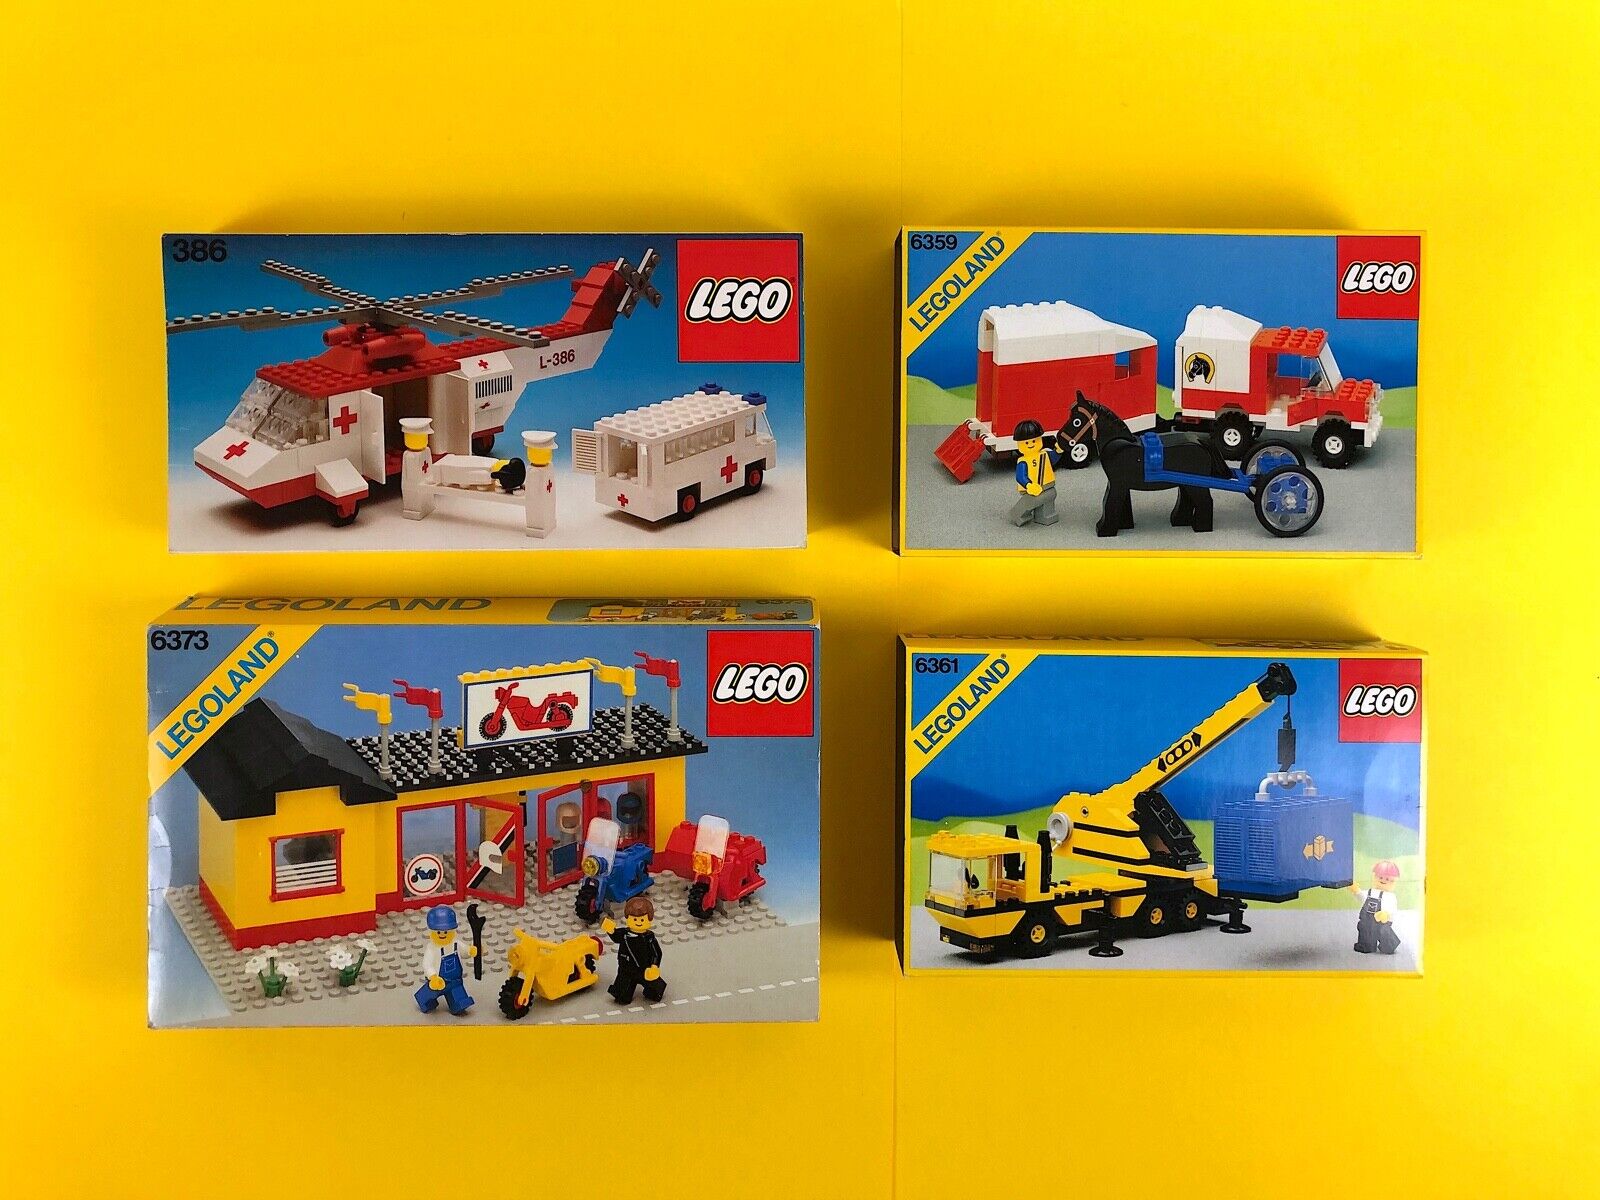 LEGO Vintage Classic Town Bundle Job Lot 386 6359 6373 6361 Empty Boxes Sleeves